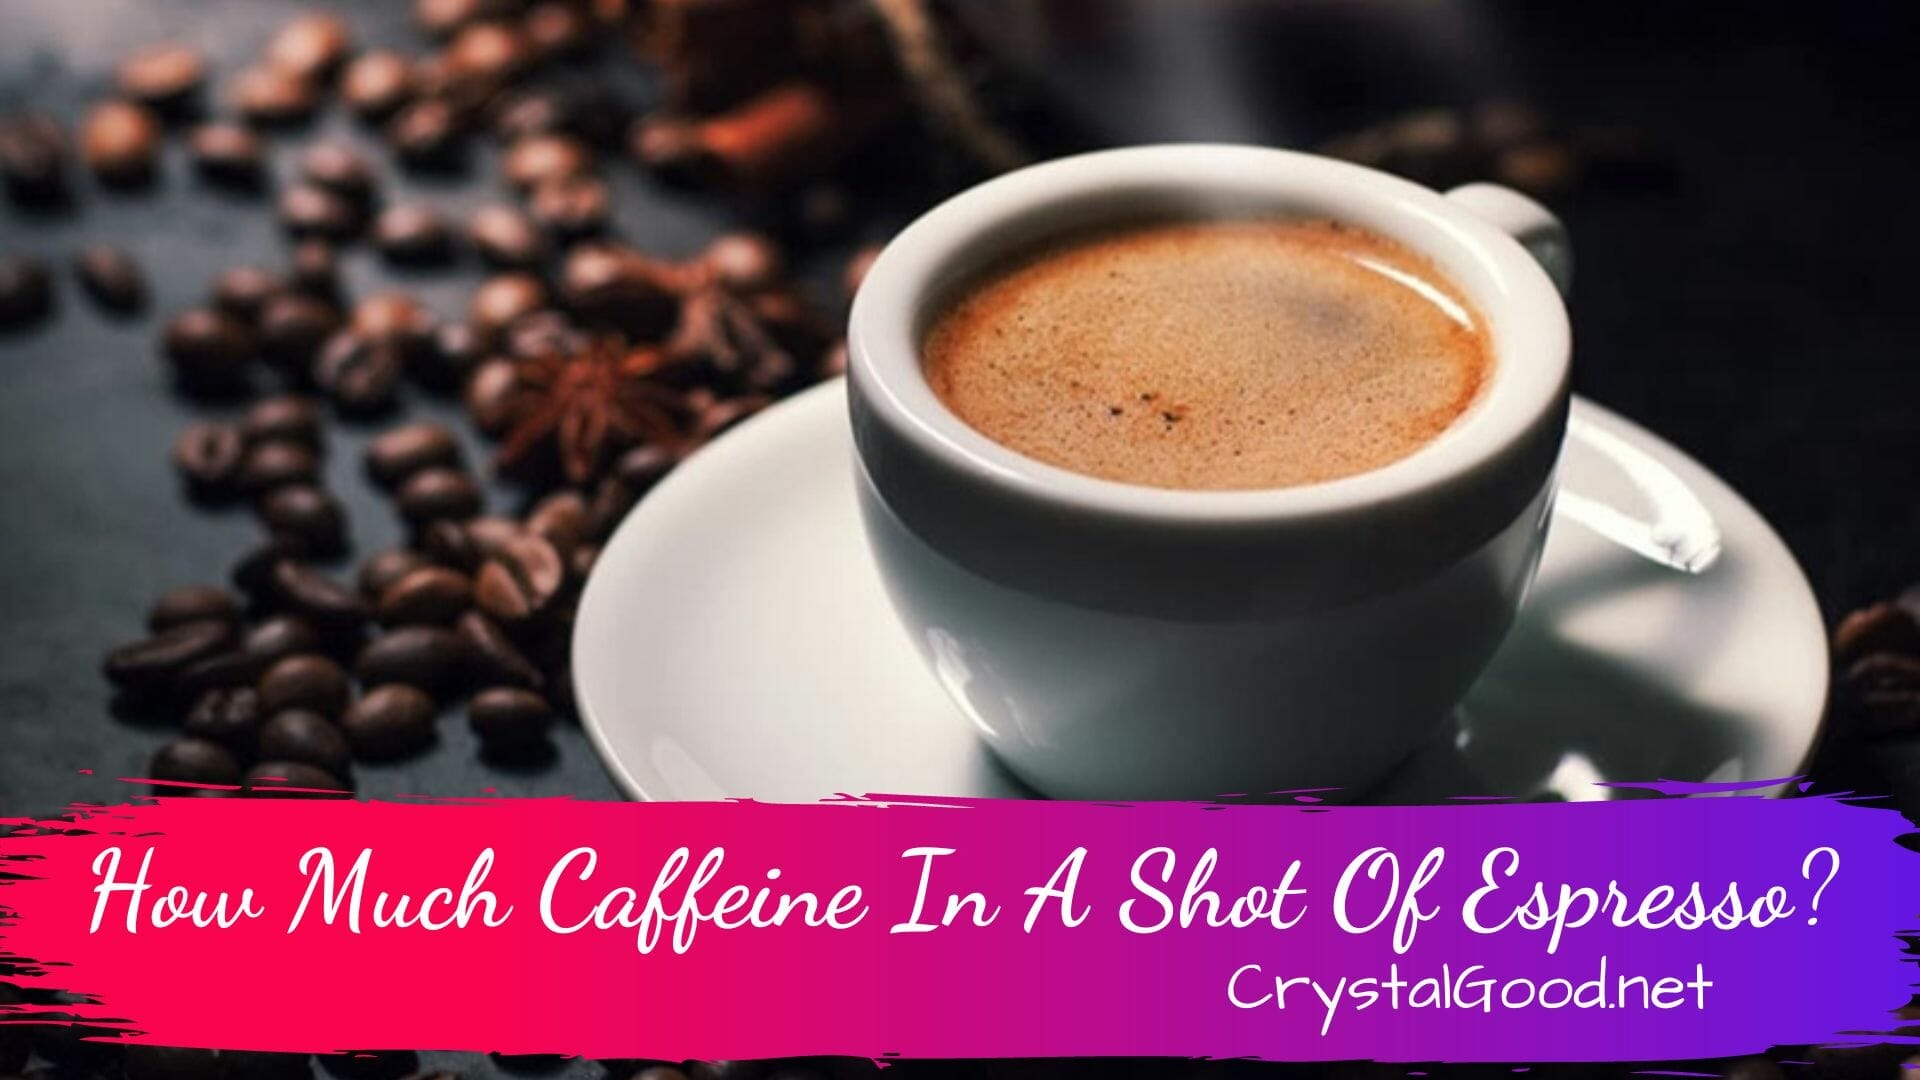 https://ea9jdhx63pk.exactdn.com/wp-content/uploads/2022/11/How-Much-Caffeine-In-A-Shot-Of-Espresso.jpg?strip=all&lossy=1&ssl=1